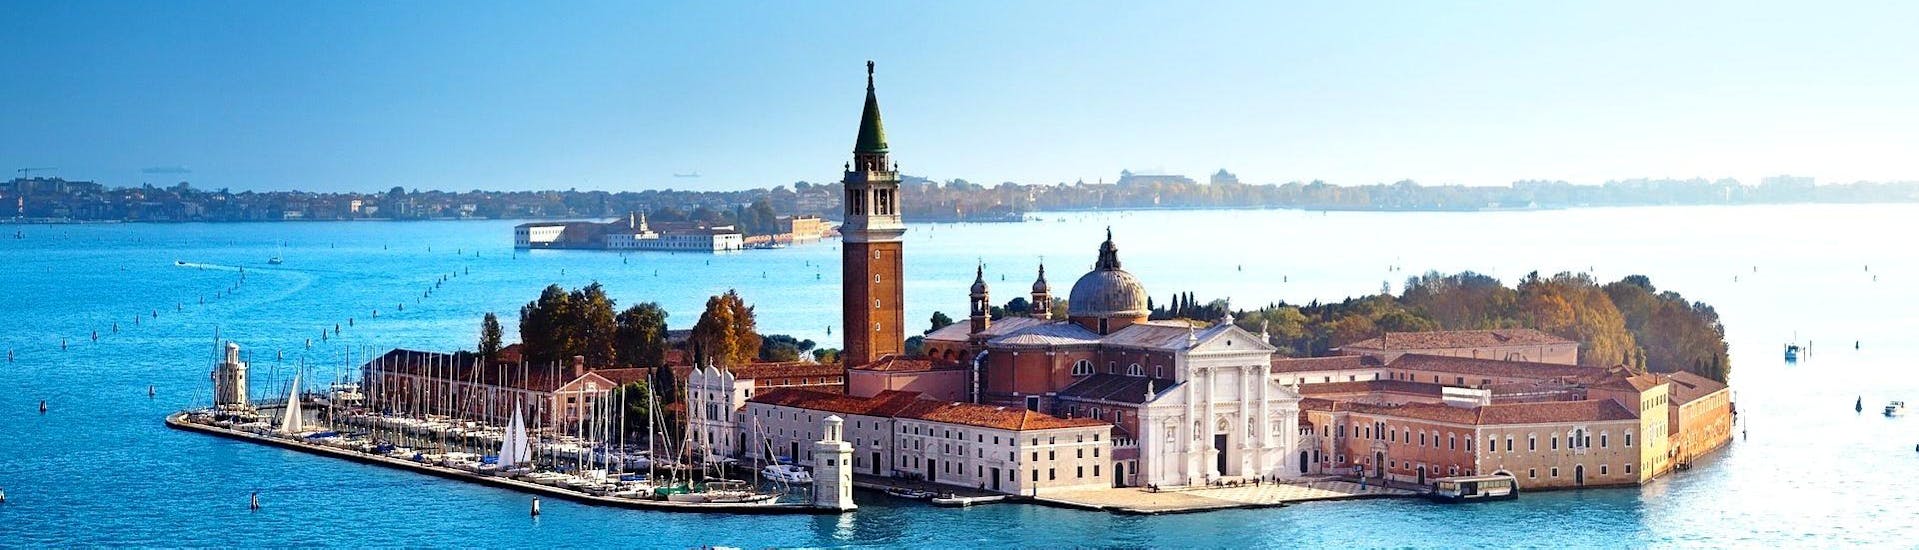 Visita guidata a Venezia e giro in gondola al Canal Grande.